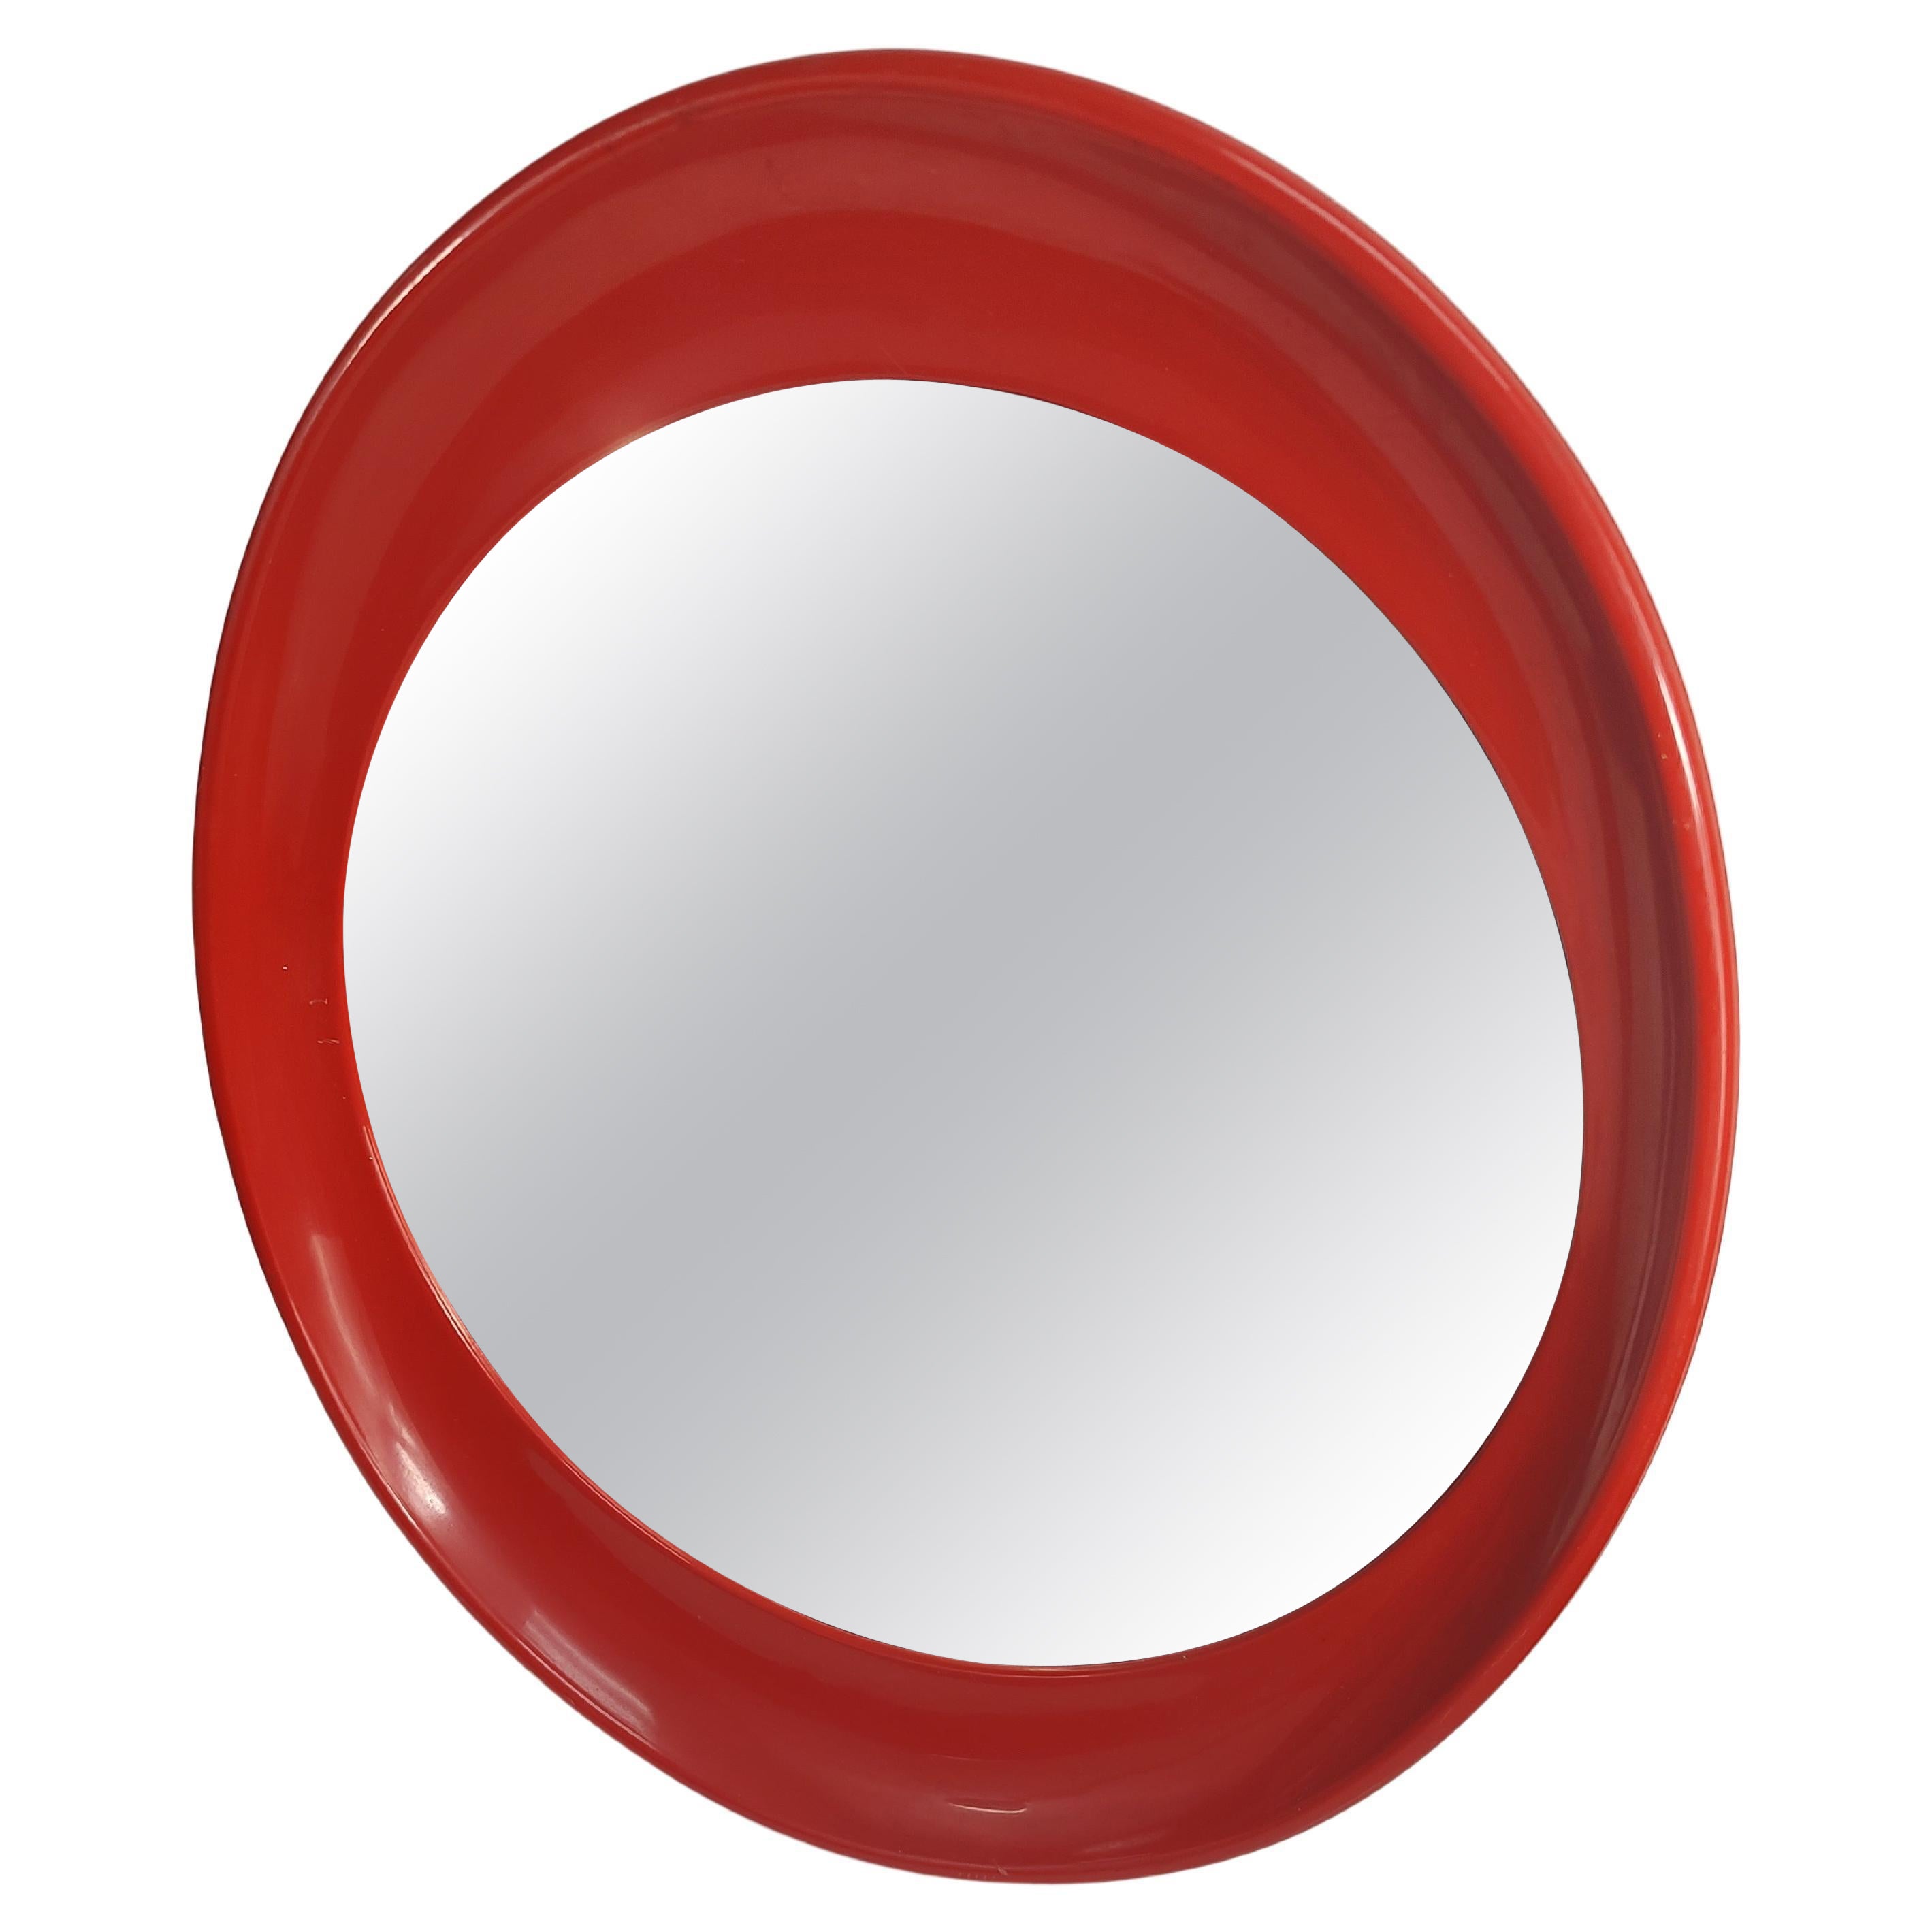 Mid Century Modern Italian Red Plastic Oval Mirror Attributed to Joe Colombo